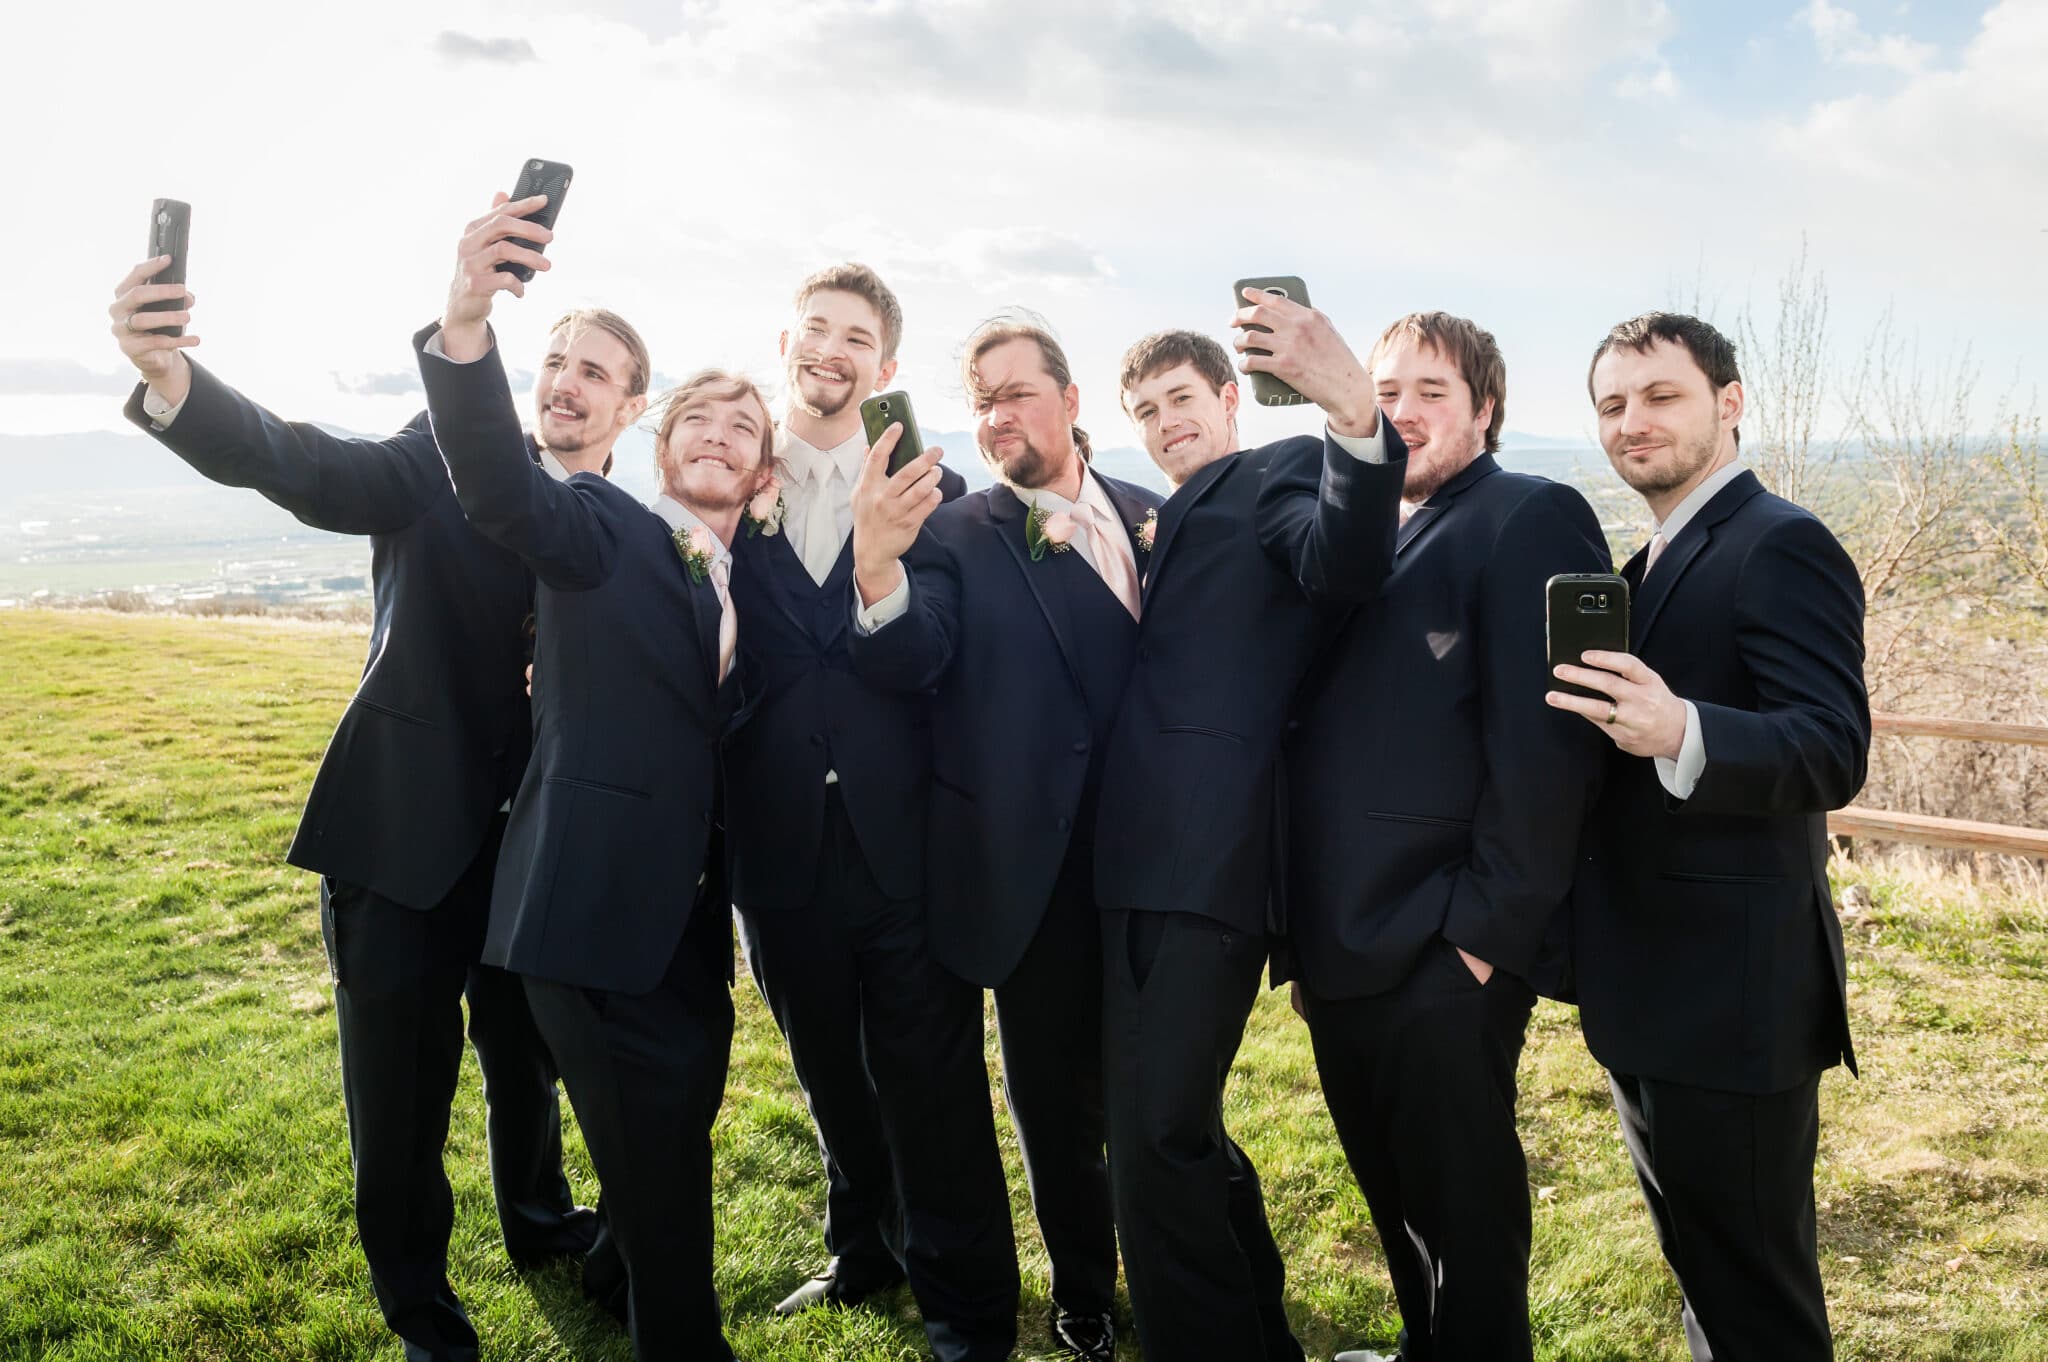 Groomsmen take selfies of themselves during the wedding.